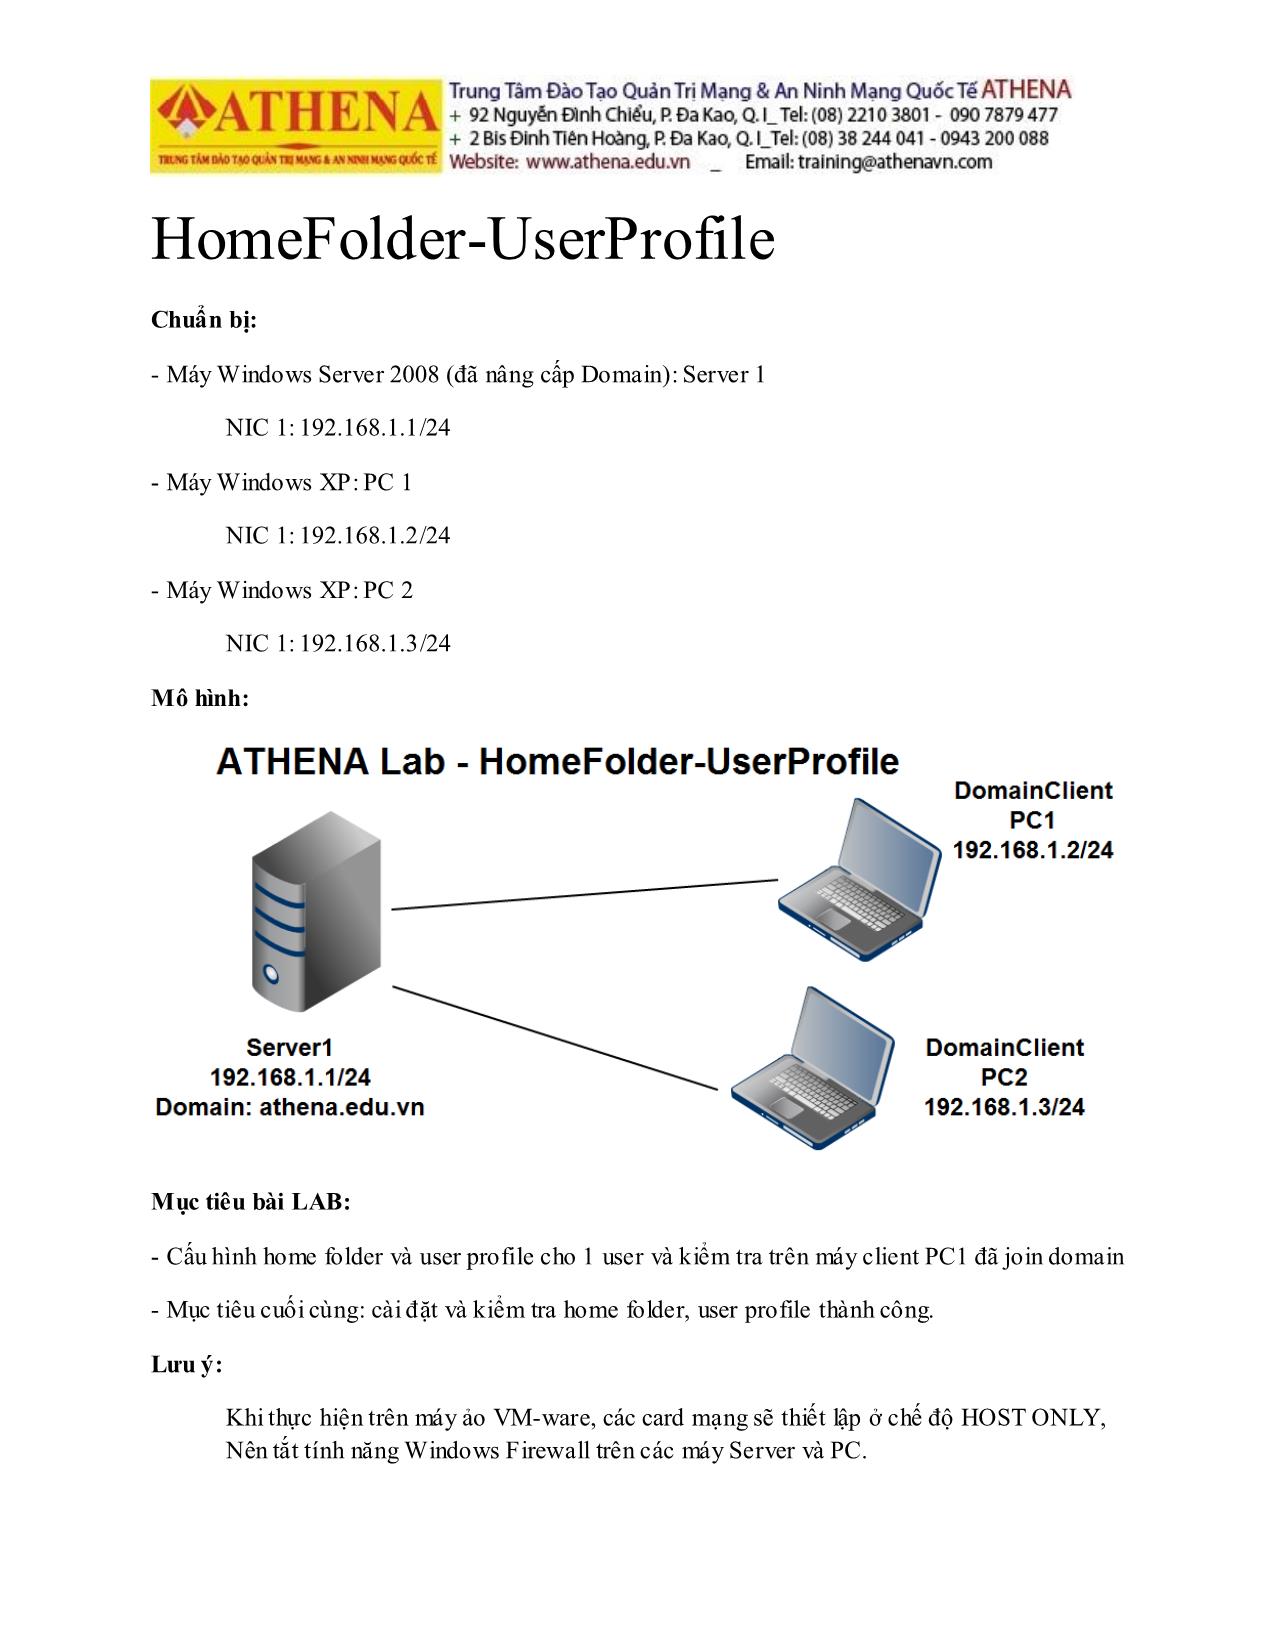 Tài liệu Homefolder - Userprofile trang 1